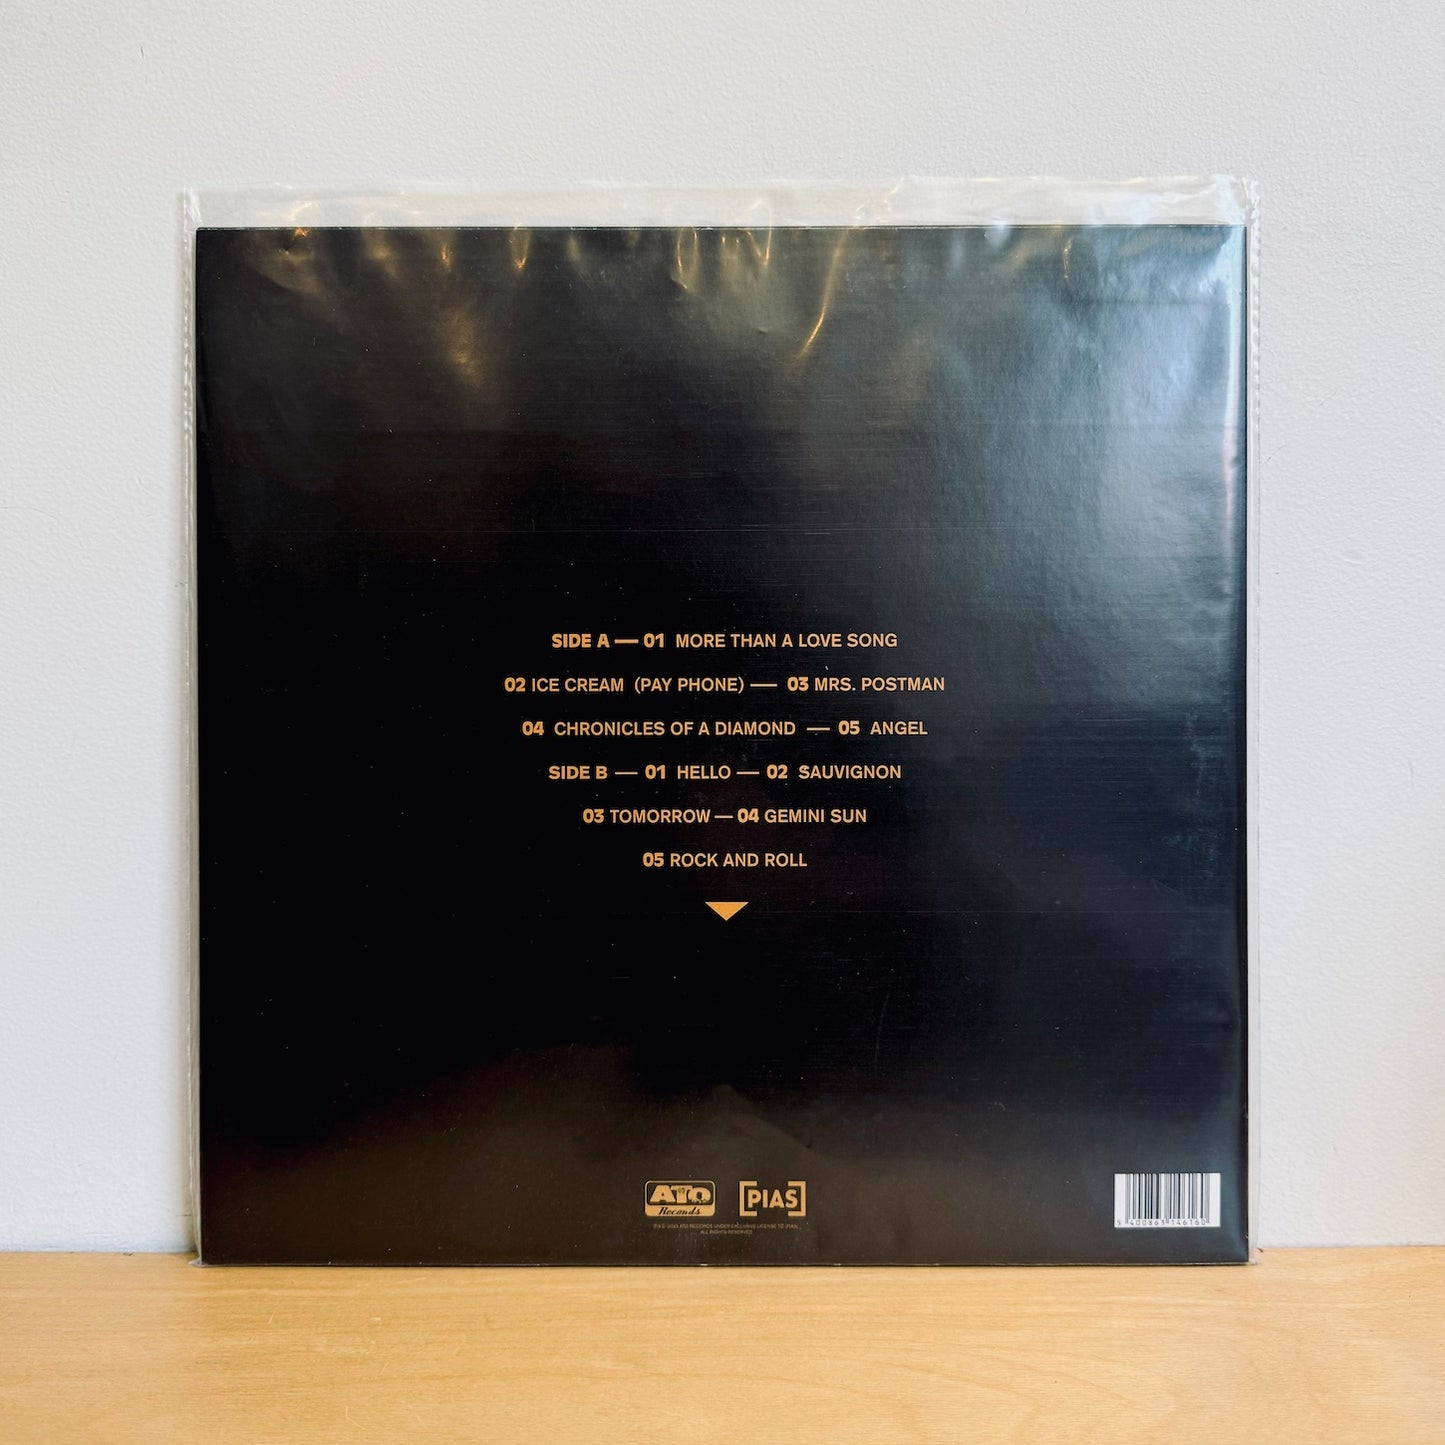 Black Pumas - Chronicles of a Diamond. LP [Clear Vinyl]